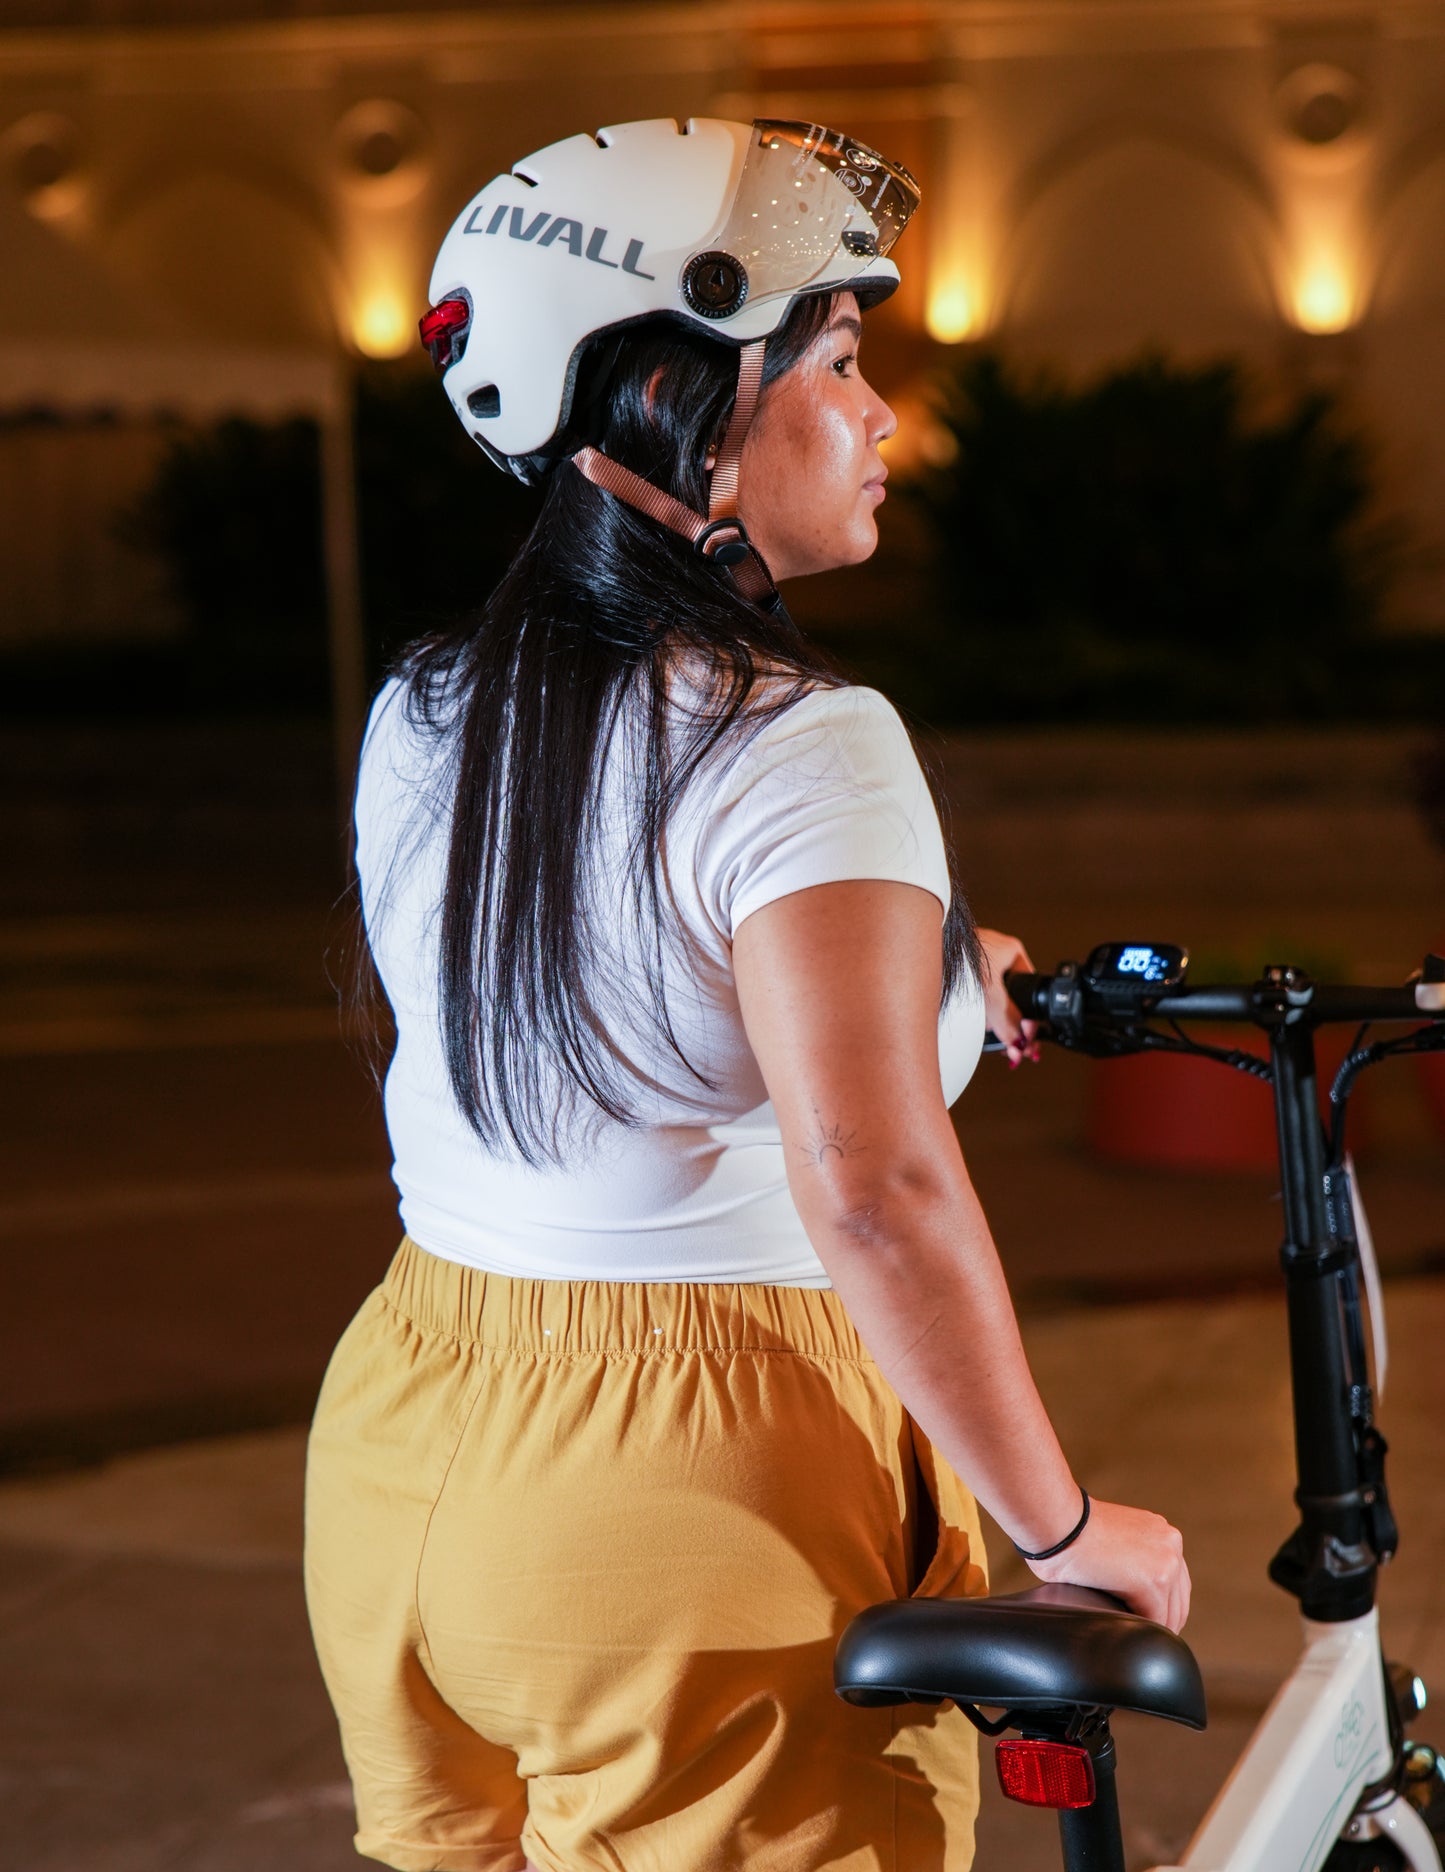 Livall Smart Urban Helmet L23